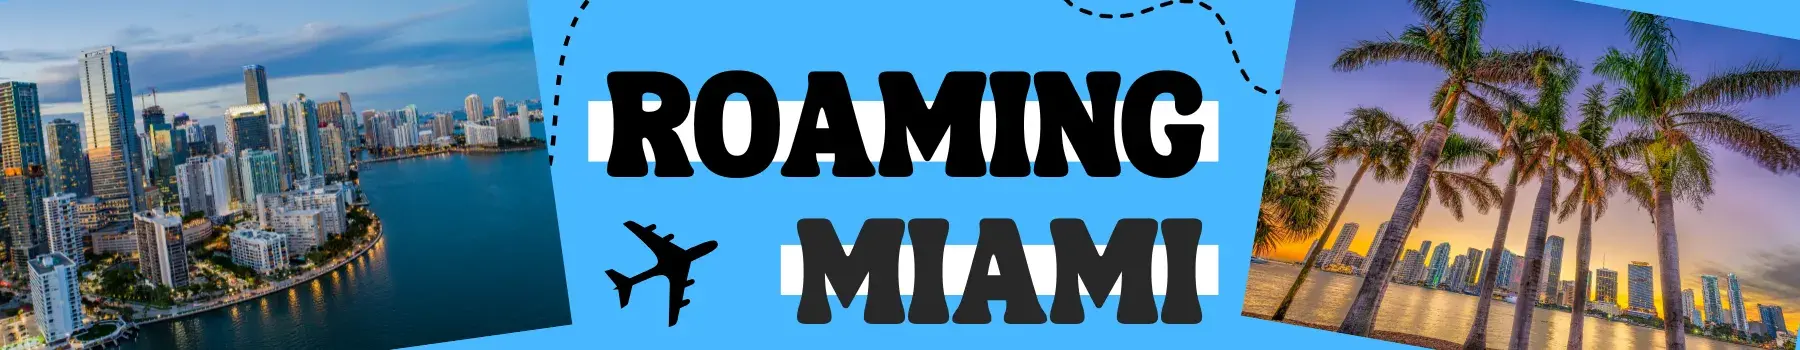 Roaming Miami